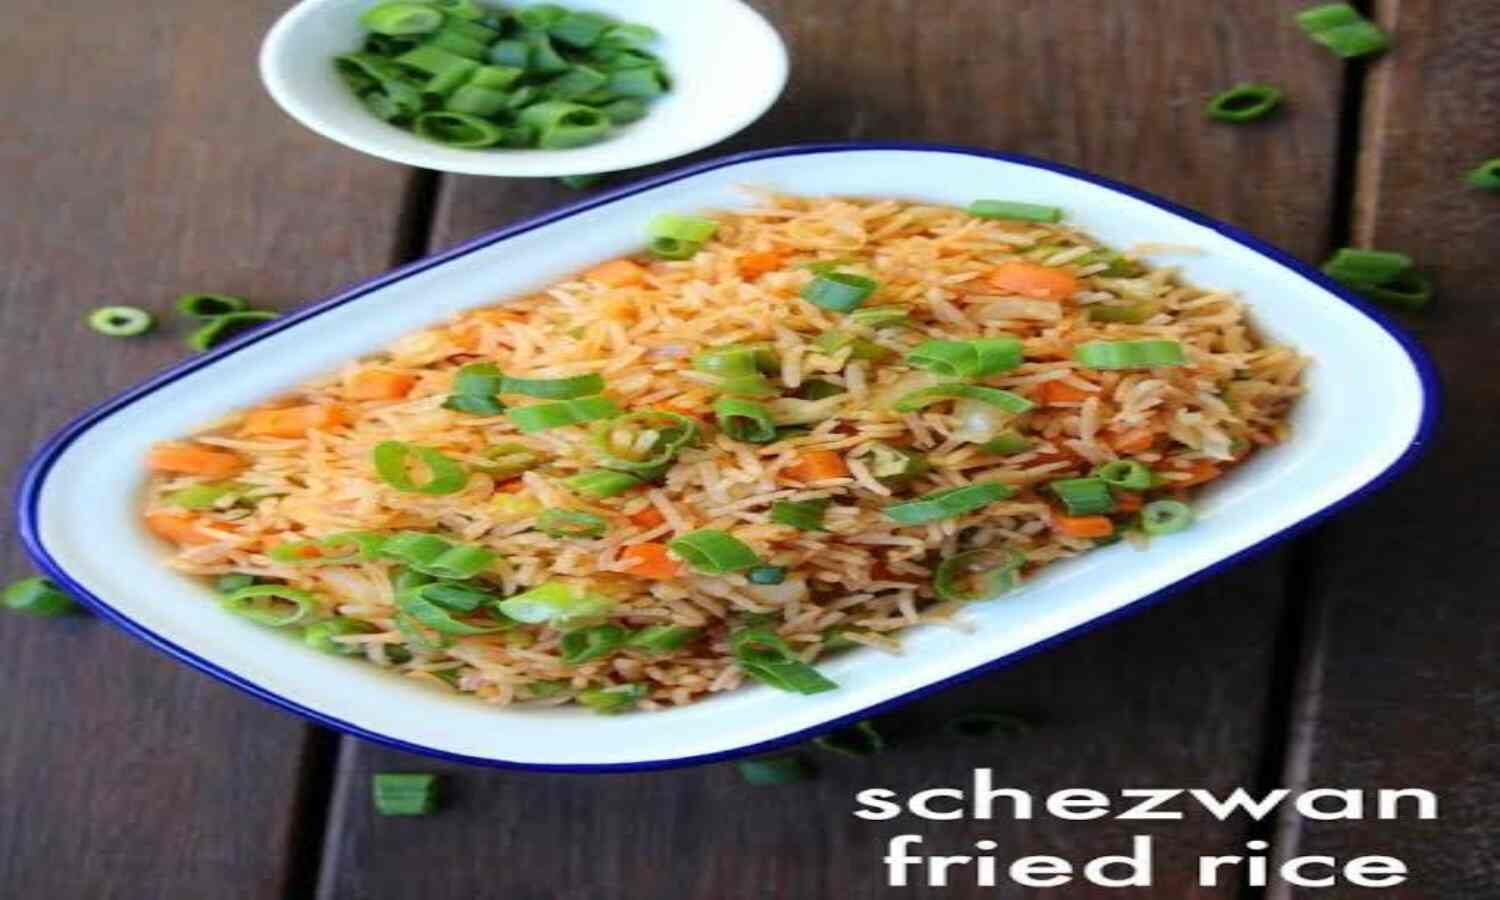 Schezwan Fried Rice Recipe: How To Make Hotel Like Schezwan Fried Rice In 10 Minutes, Learn Recipe